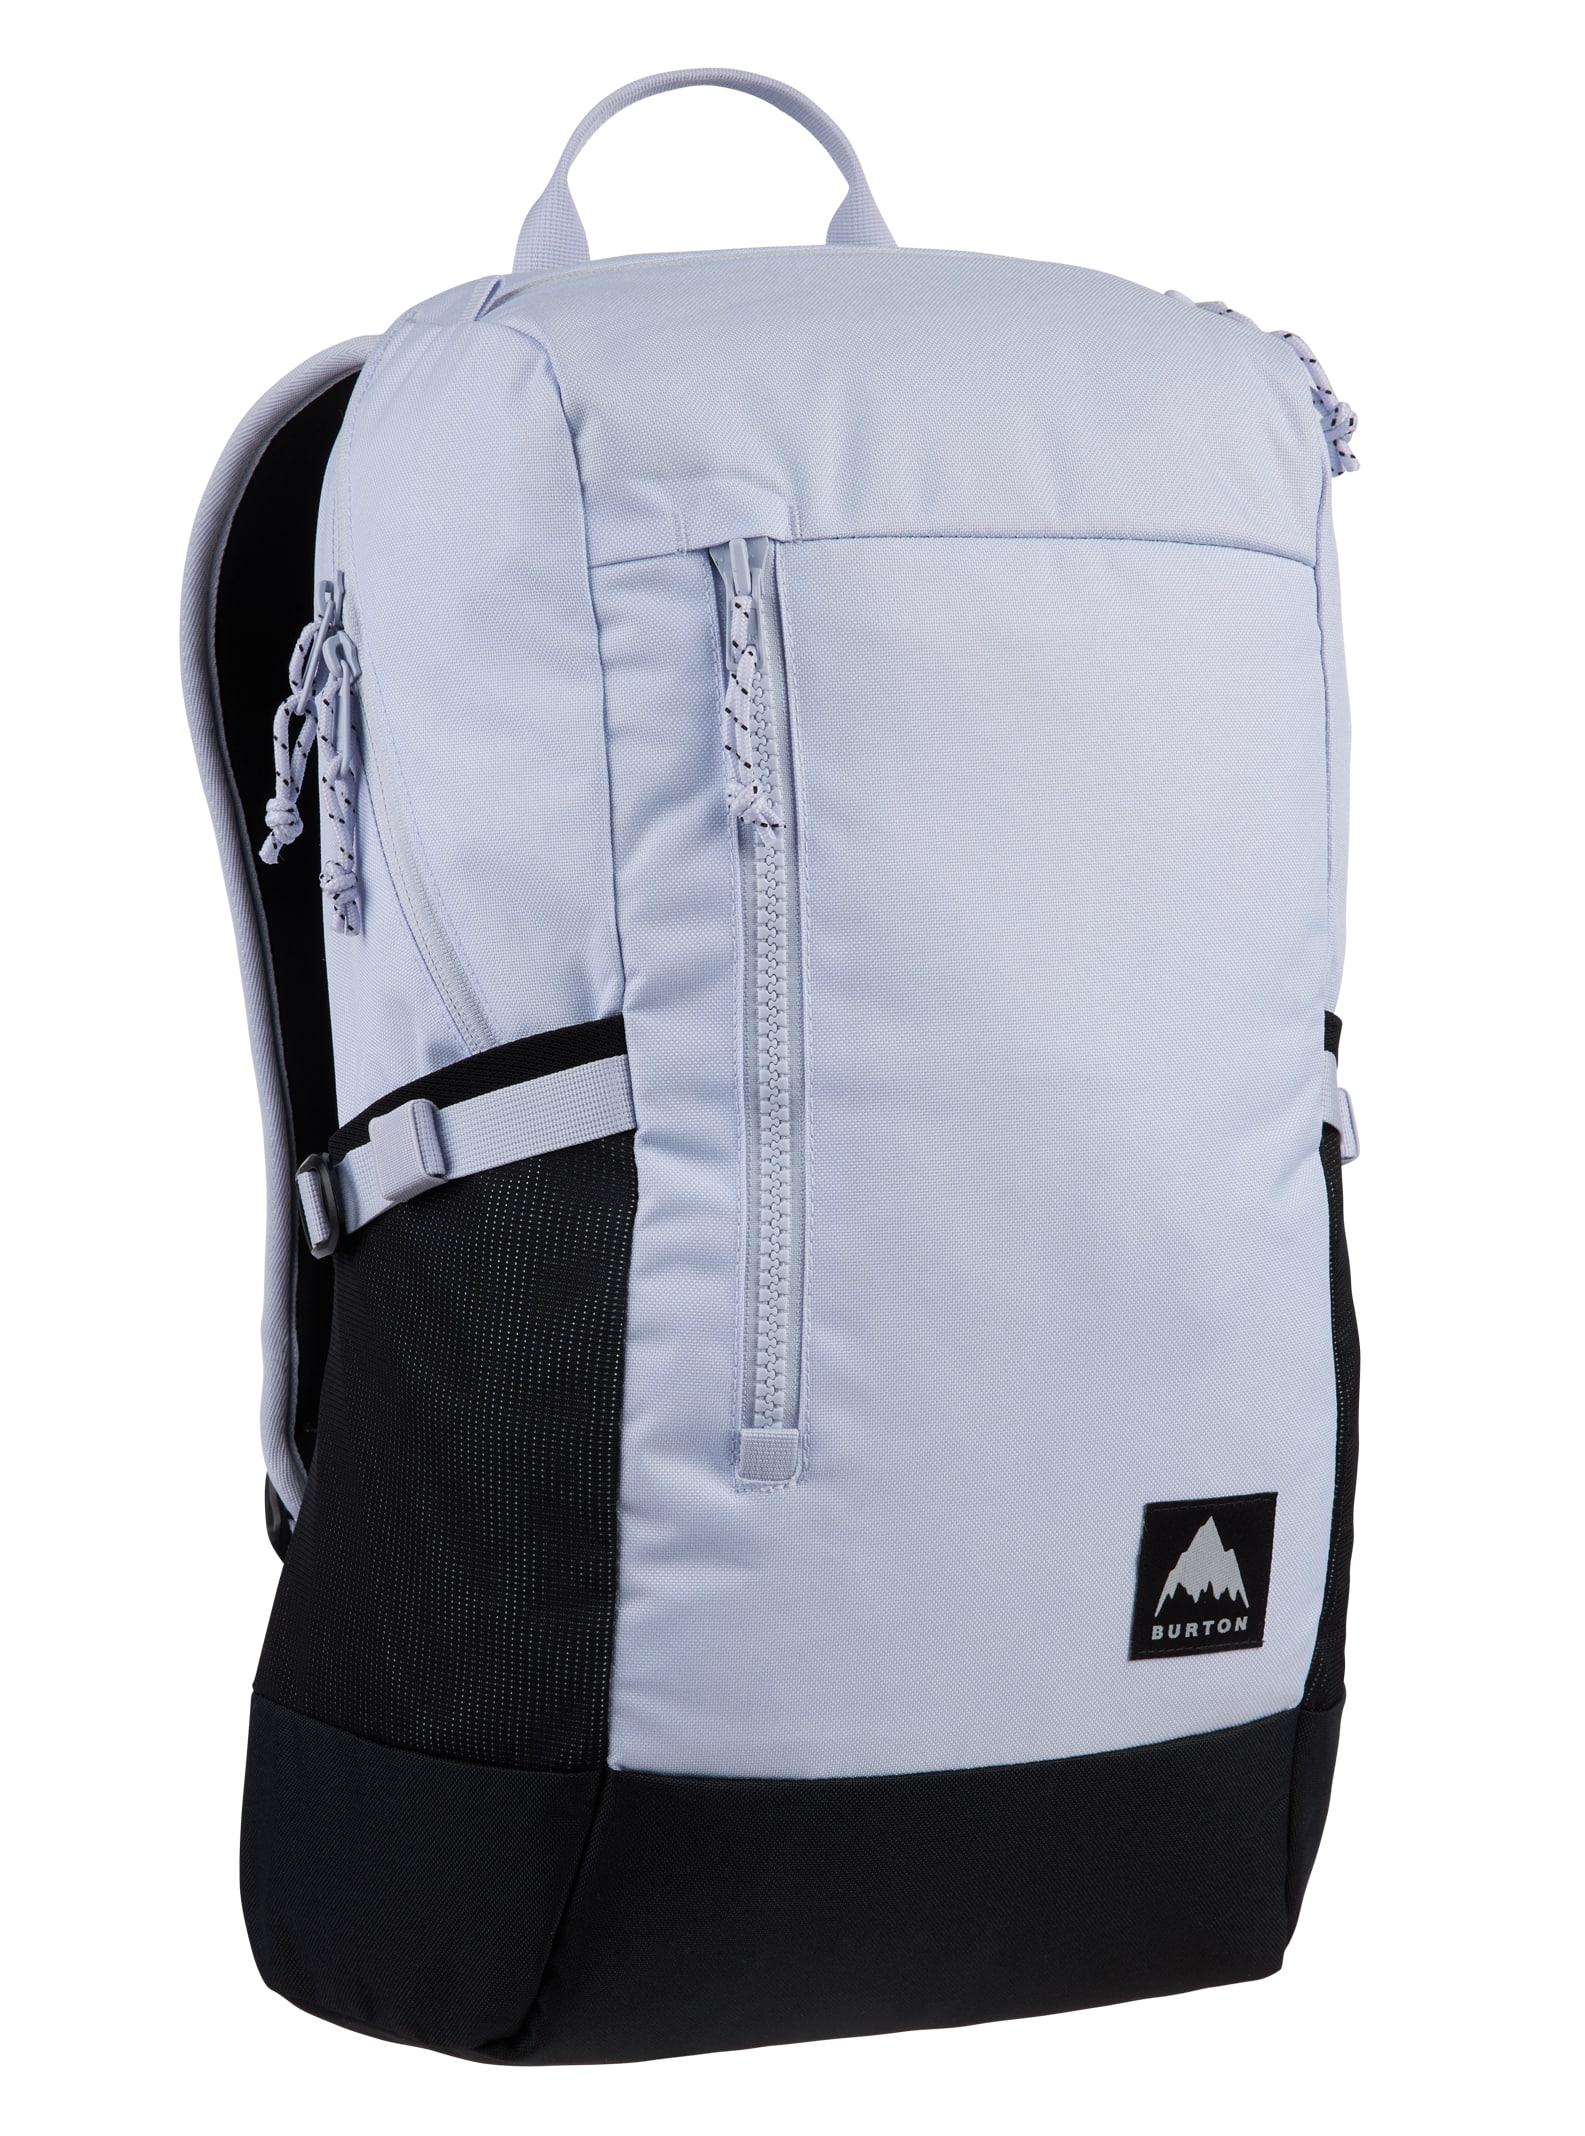 Rucksacks & Backpacks | Snowboard Backpacks | Burton Snowboards EE